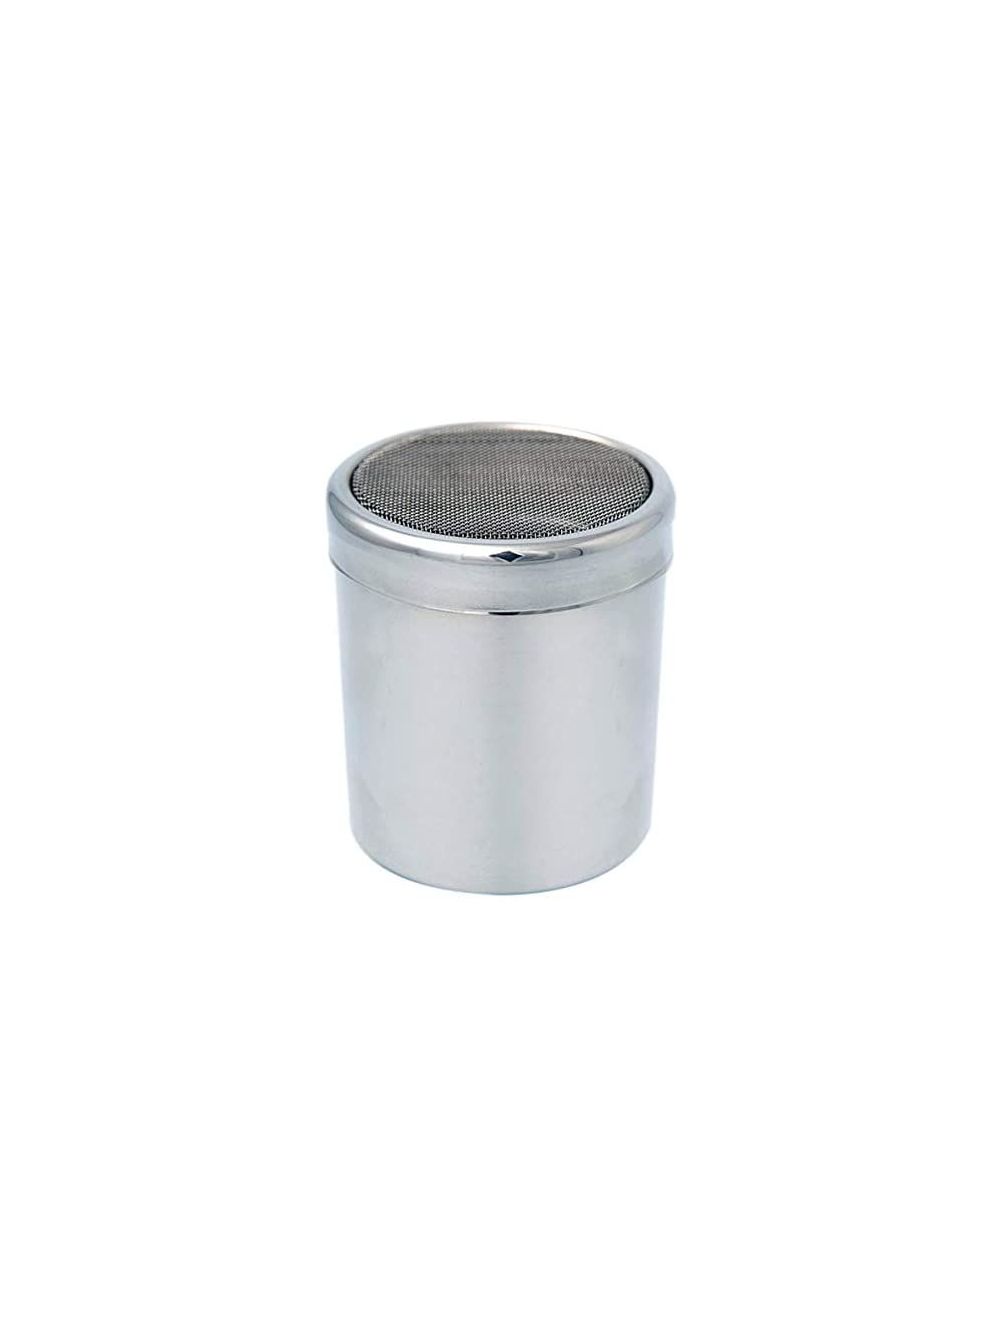 Raj Spice Dispenser with Mesh, Silver, CSD003, 1piece